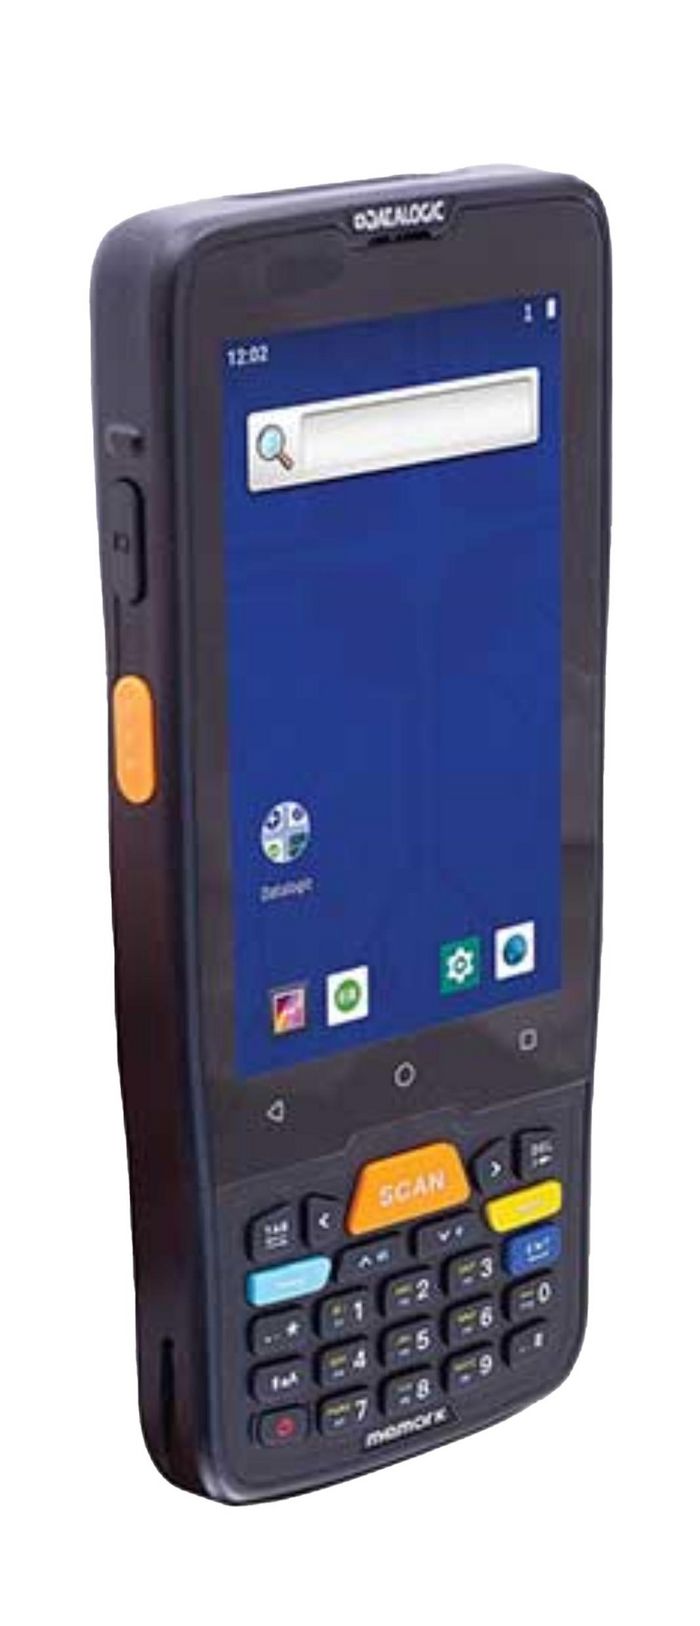 Datalogic Memor K- Wifi,4" display,BT V4.2,3GB RAM/32GB Flash,8MP Camera,2D Imager w Green Spot, Android 9, CE - W125839824